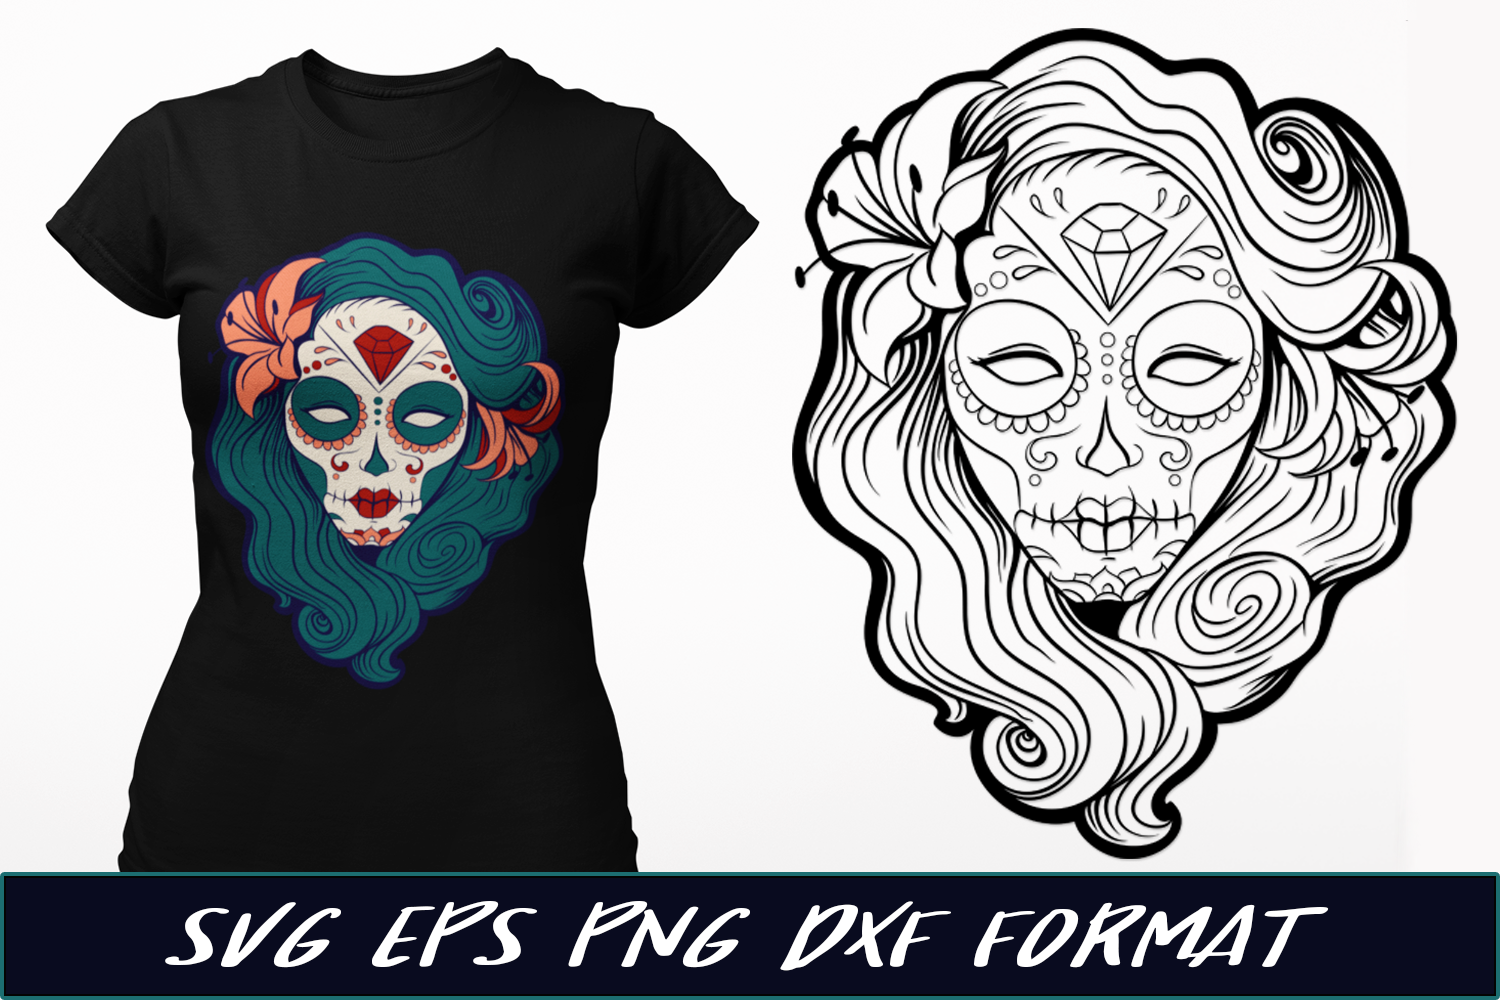 Download Free Download Images For New Design Svg Cf Girly Sugar Skull Svg Free